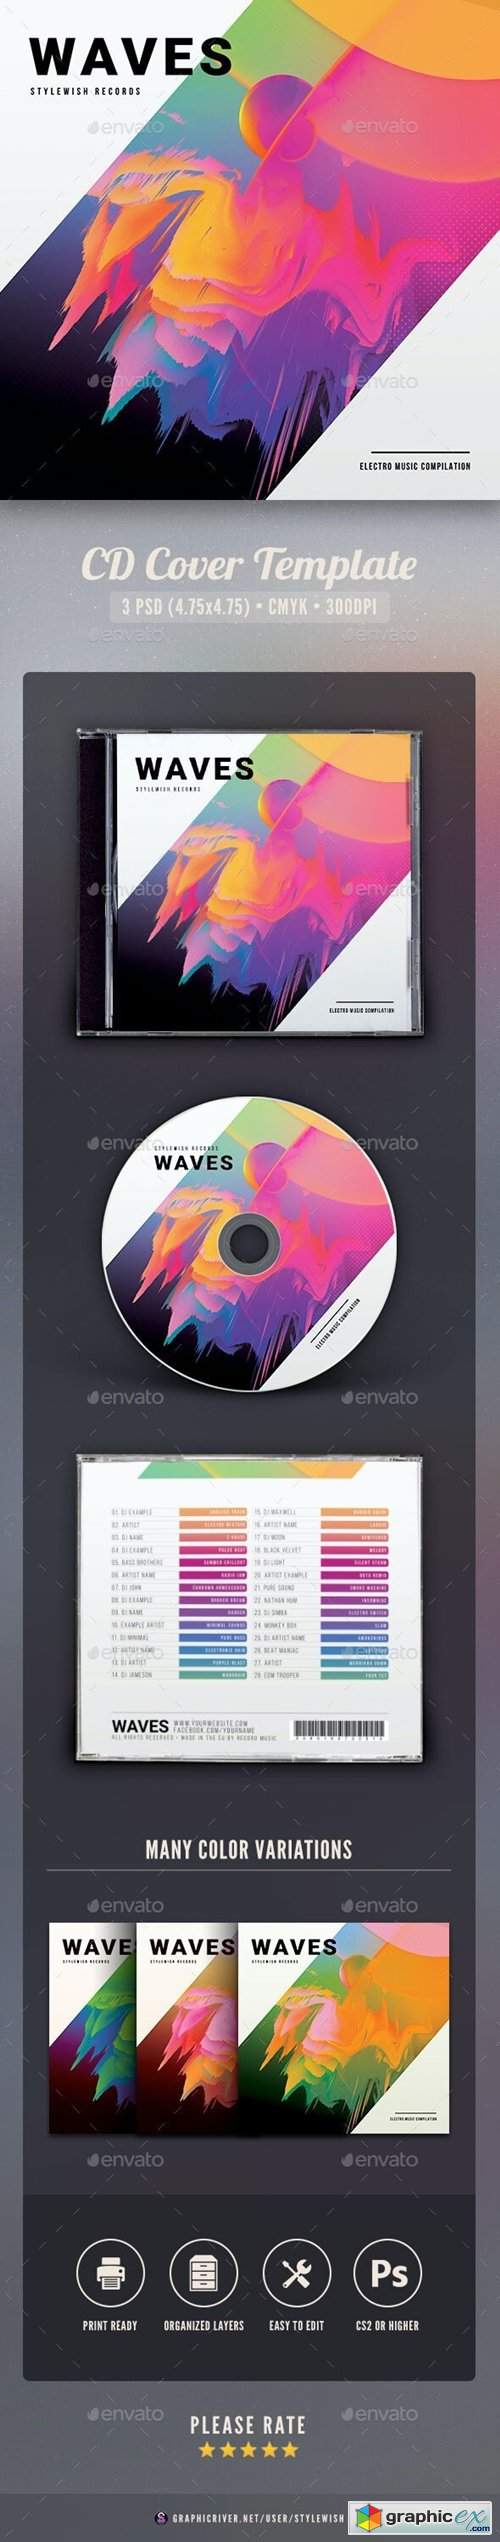 Waves CD Cover Artwork 